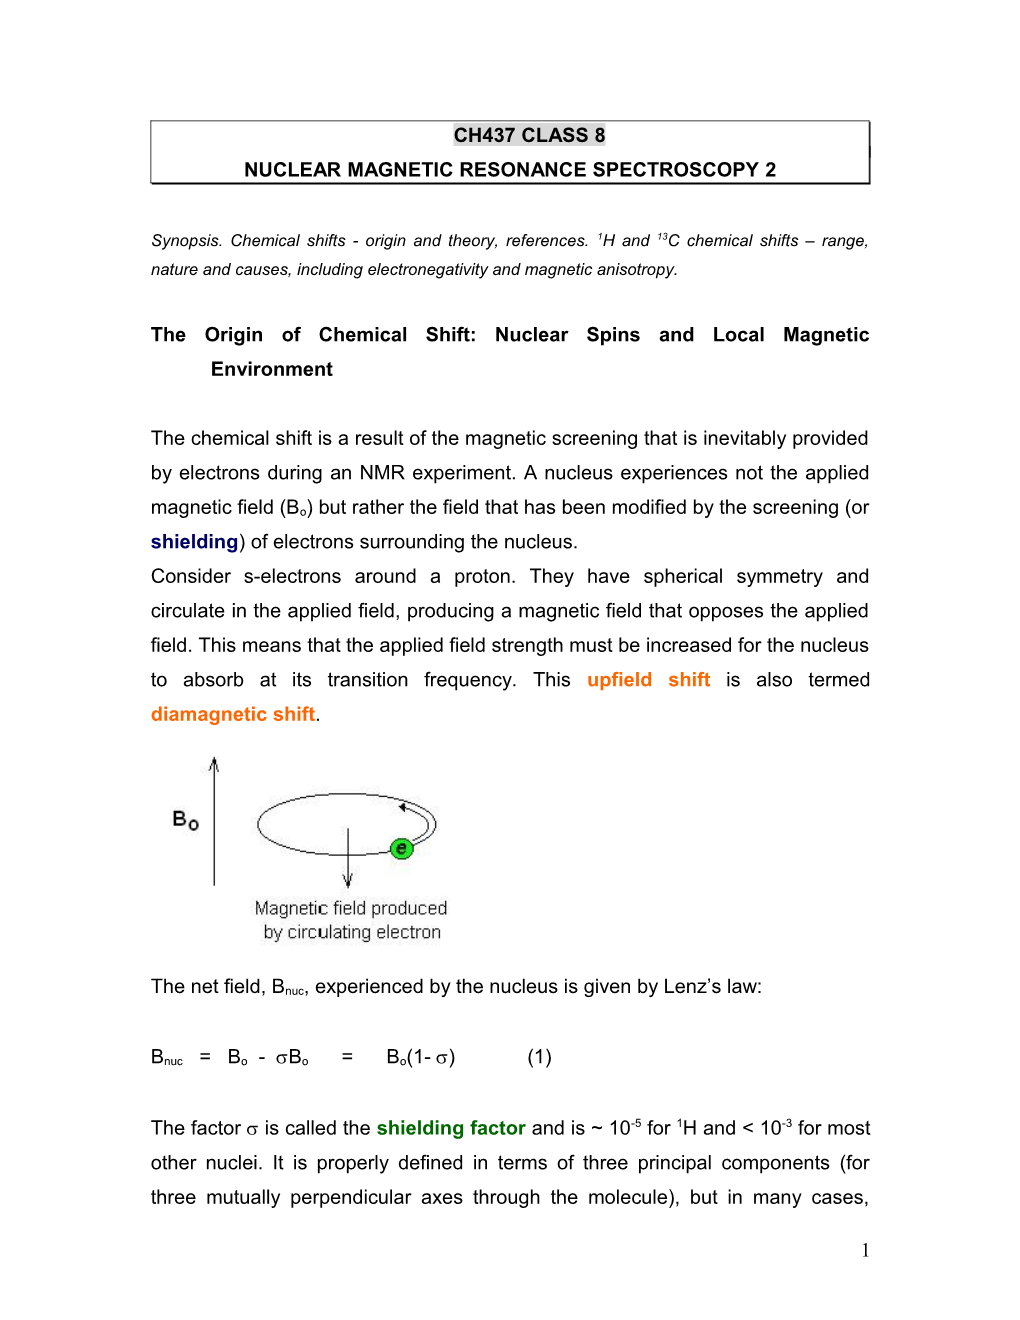 Nuclear Magnetic Resonance Spectroscopy 2